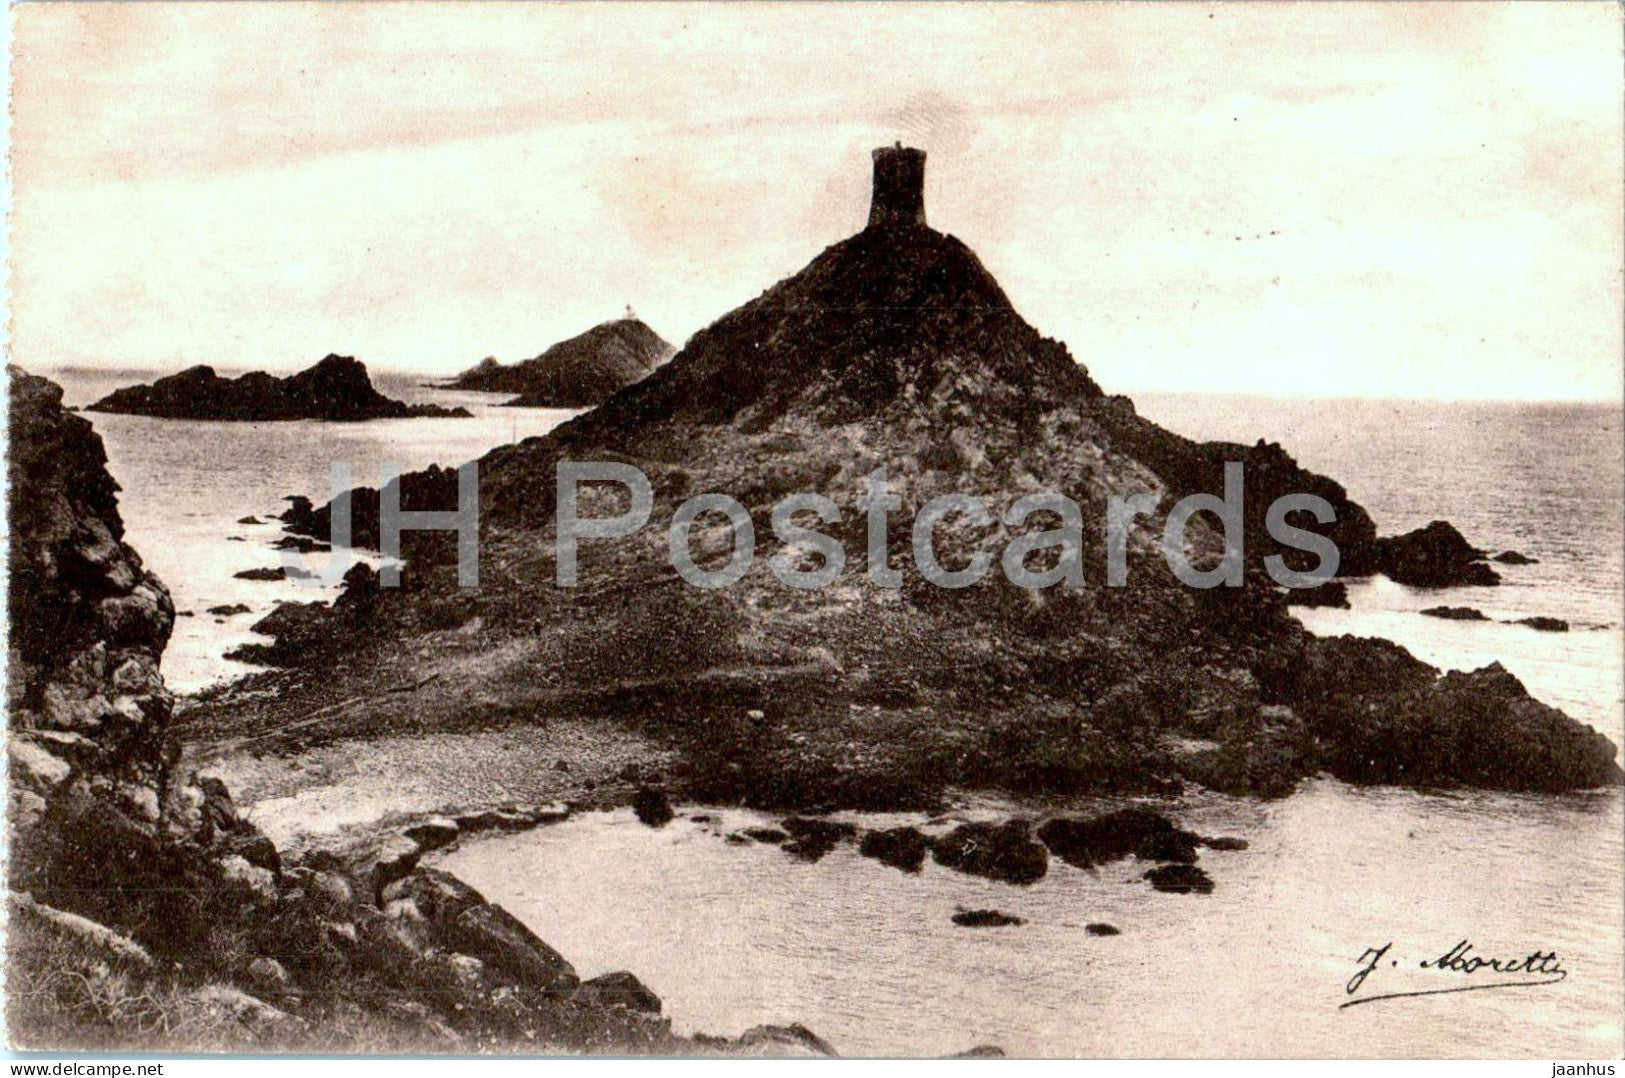 Ajaccio - Les Iles Sanguinaires - 3013 - old postcard - France - used - JH Postcards